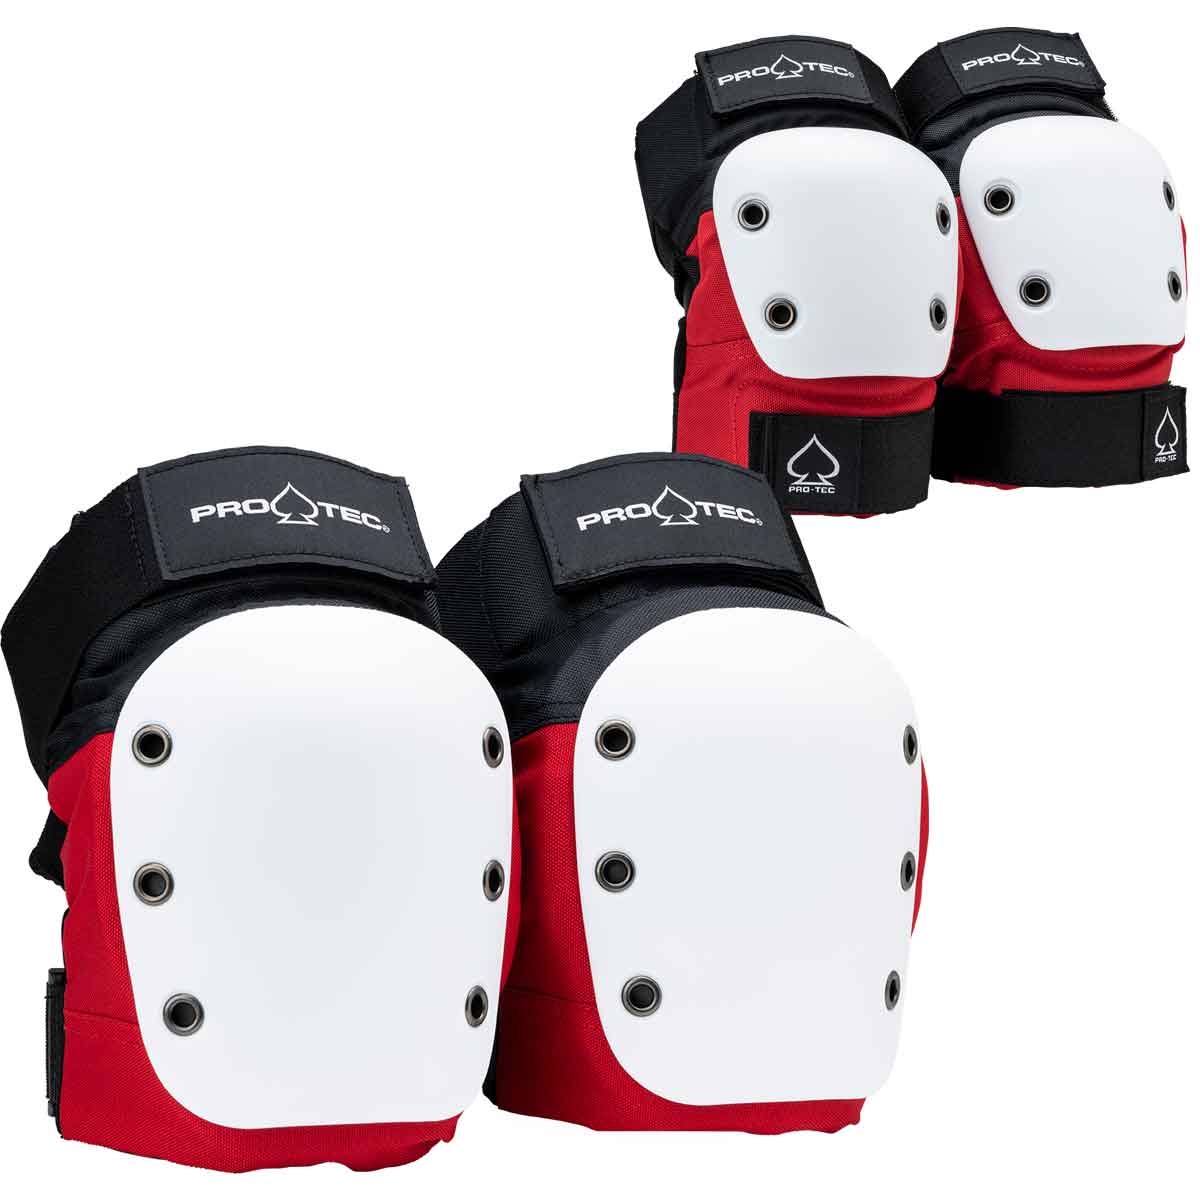 Pro-tec Knee/elbow Pad Set Helmet Skate Black All Sizes 